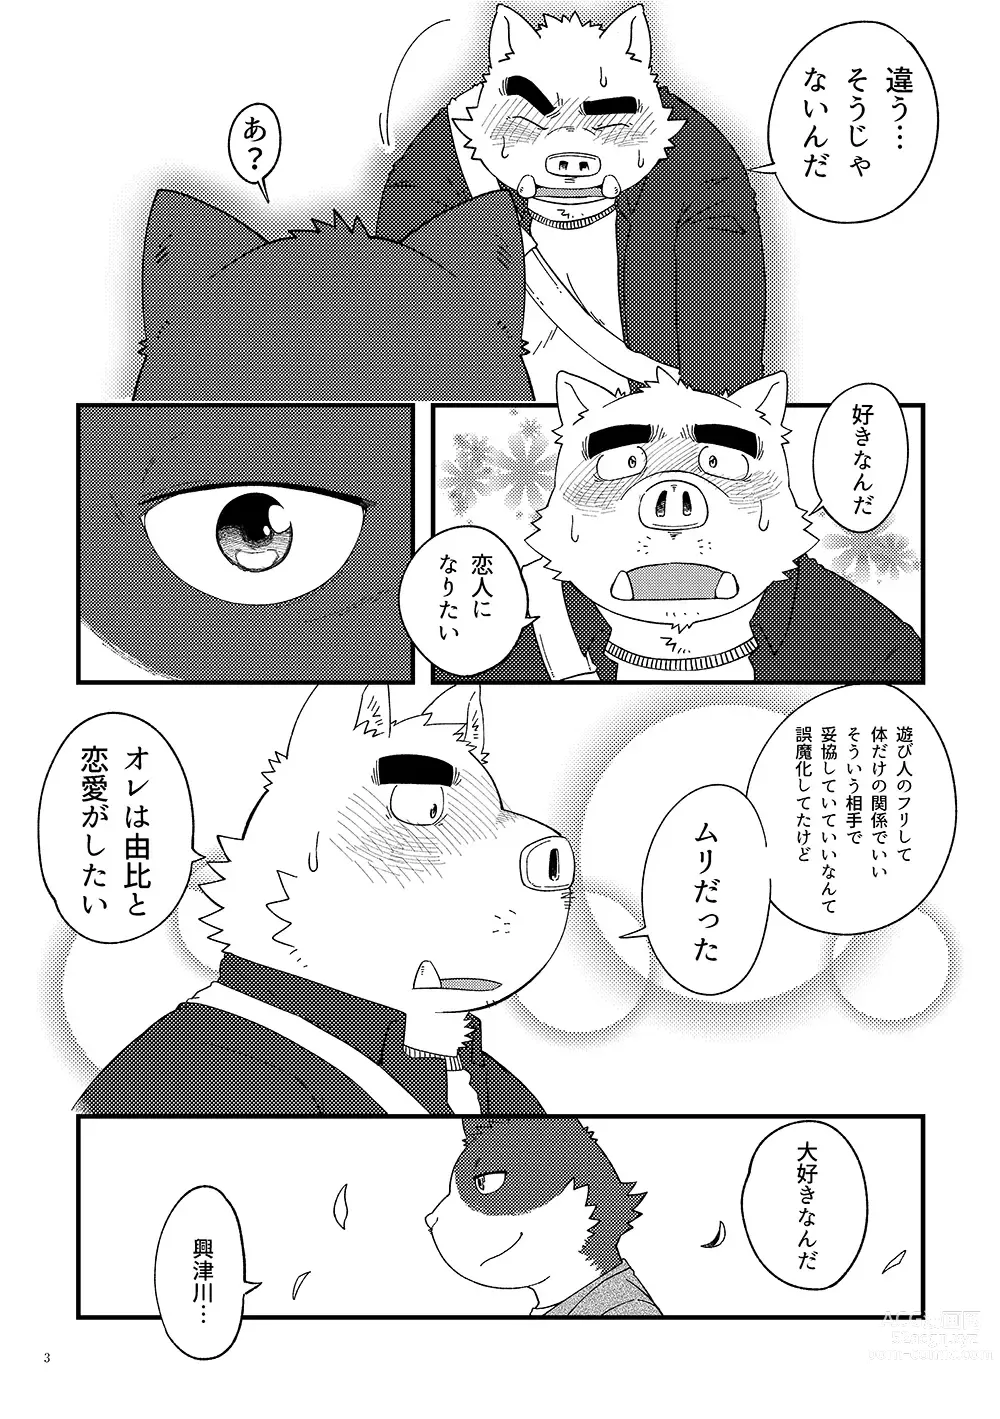 Page 4 of doujinshi Sanbunnoichi Vol 2: Datte sukidakara.